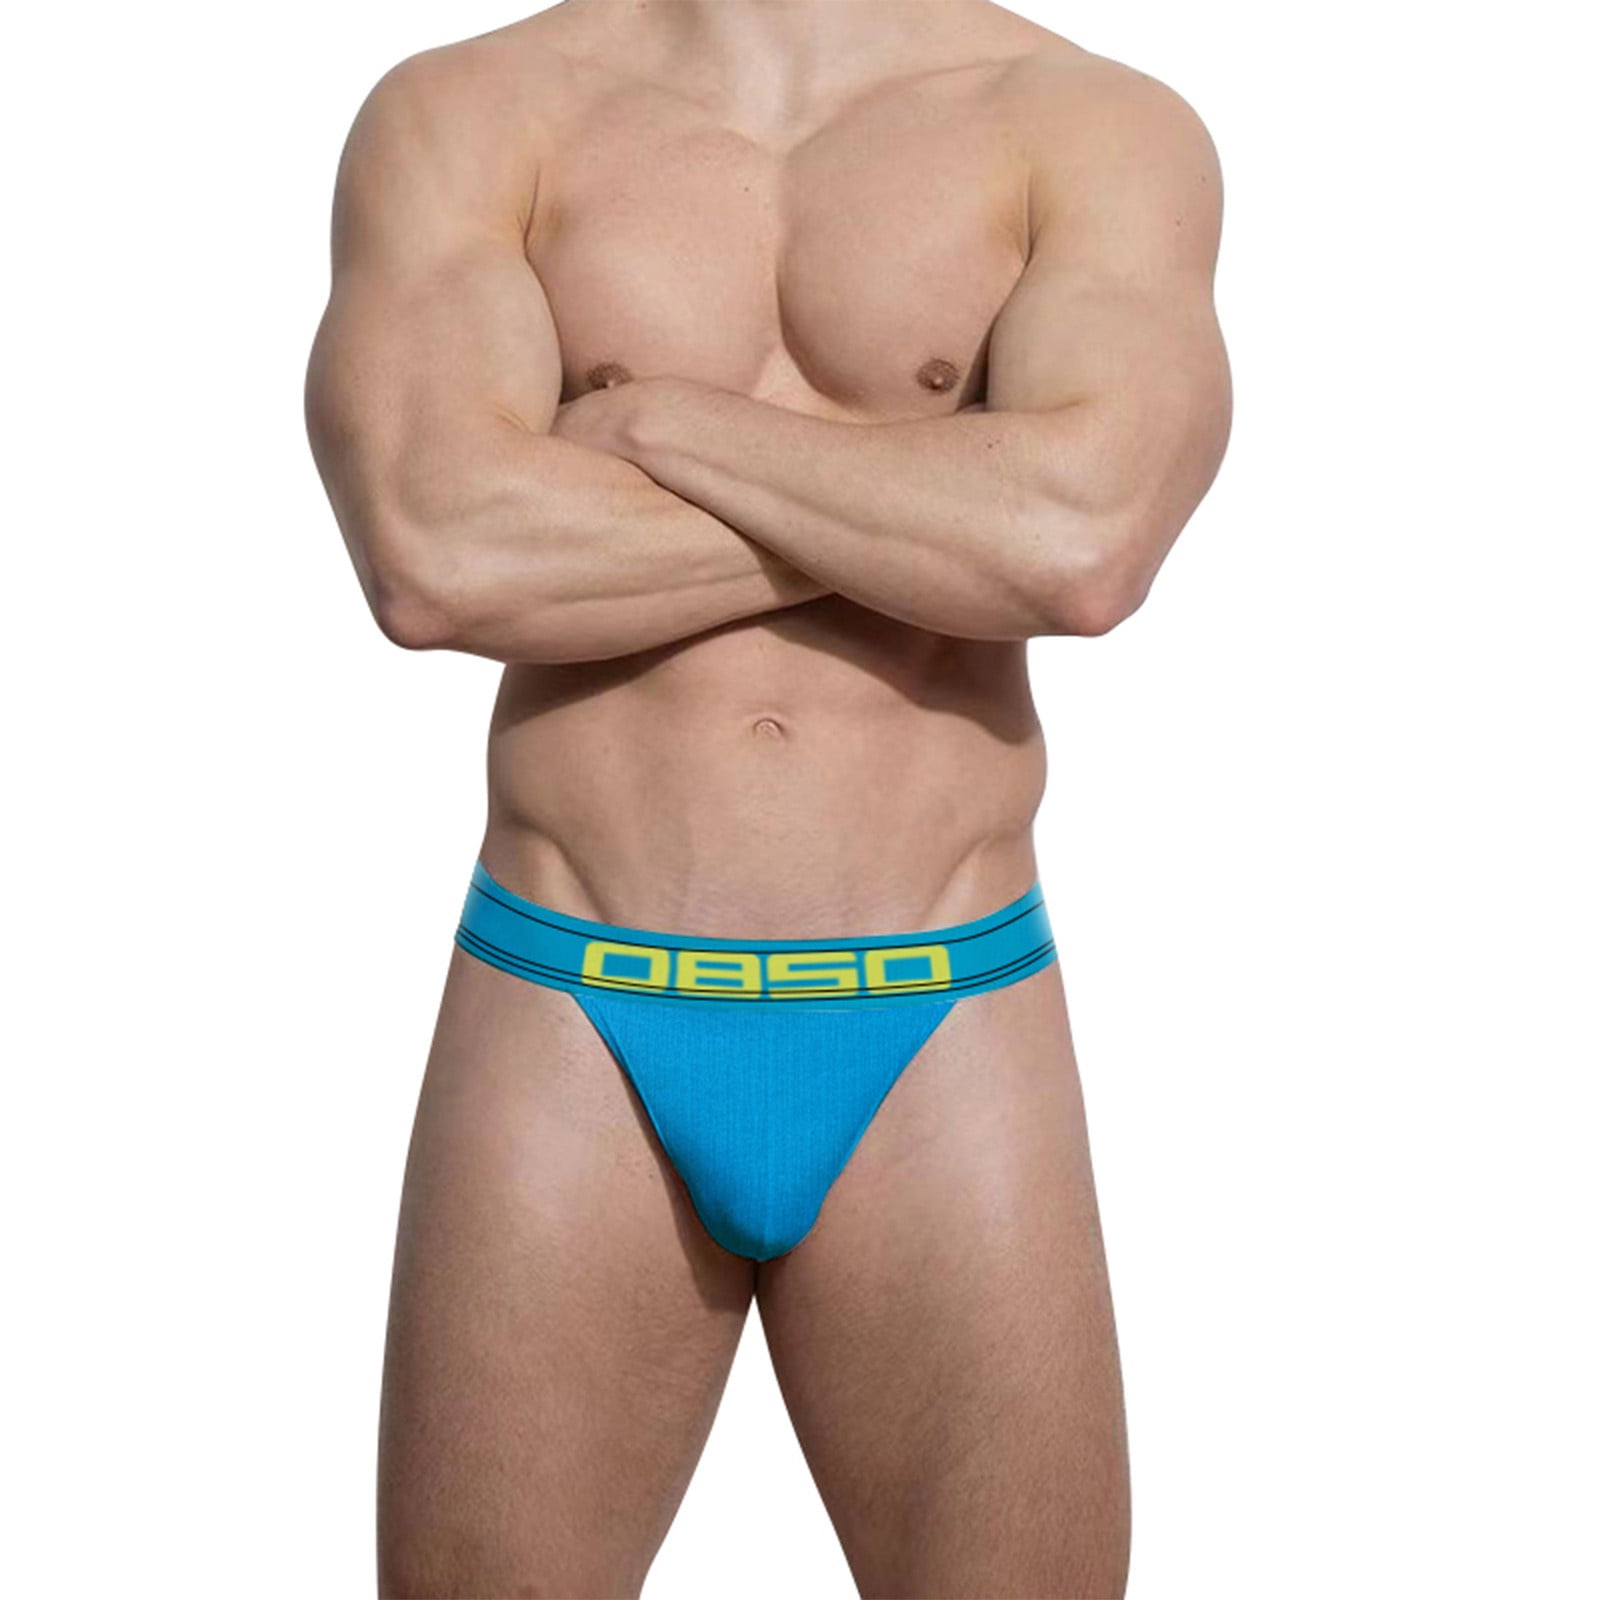 kpoplk Men's Underwear Mens Mesh Bikini Brief Thong Design High Cut Low  Rise Boxer Style Underwear(White,M) 